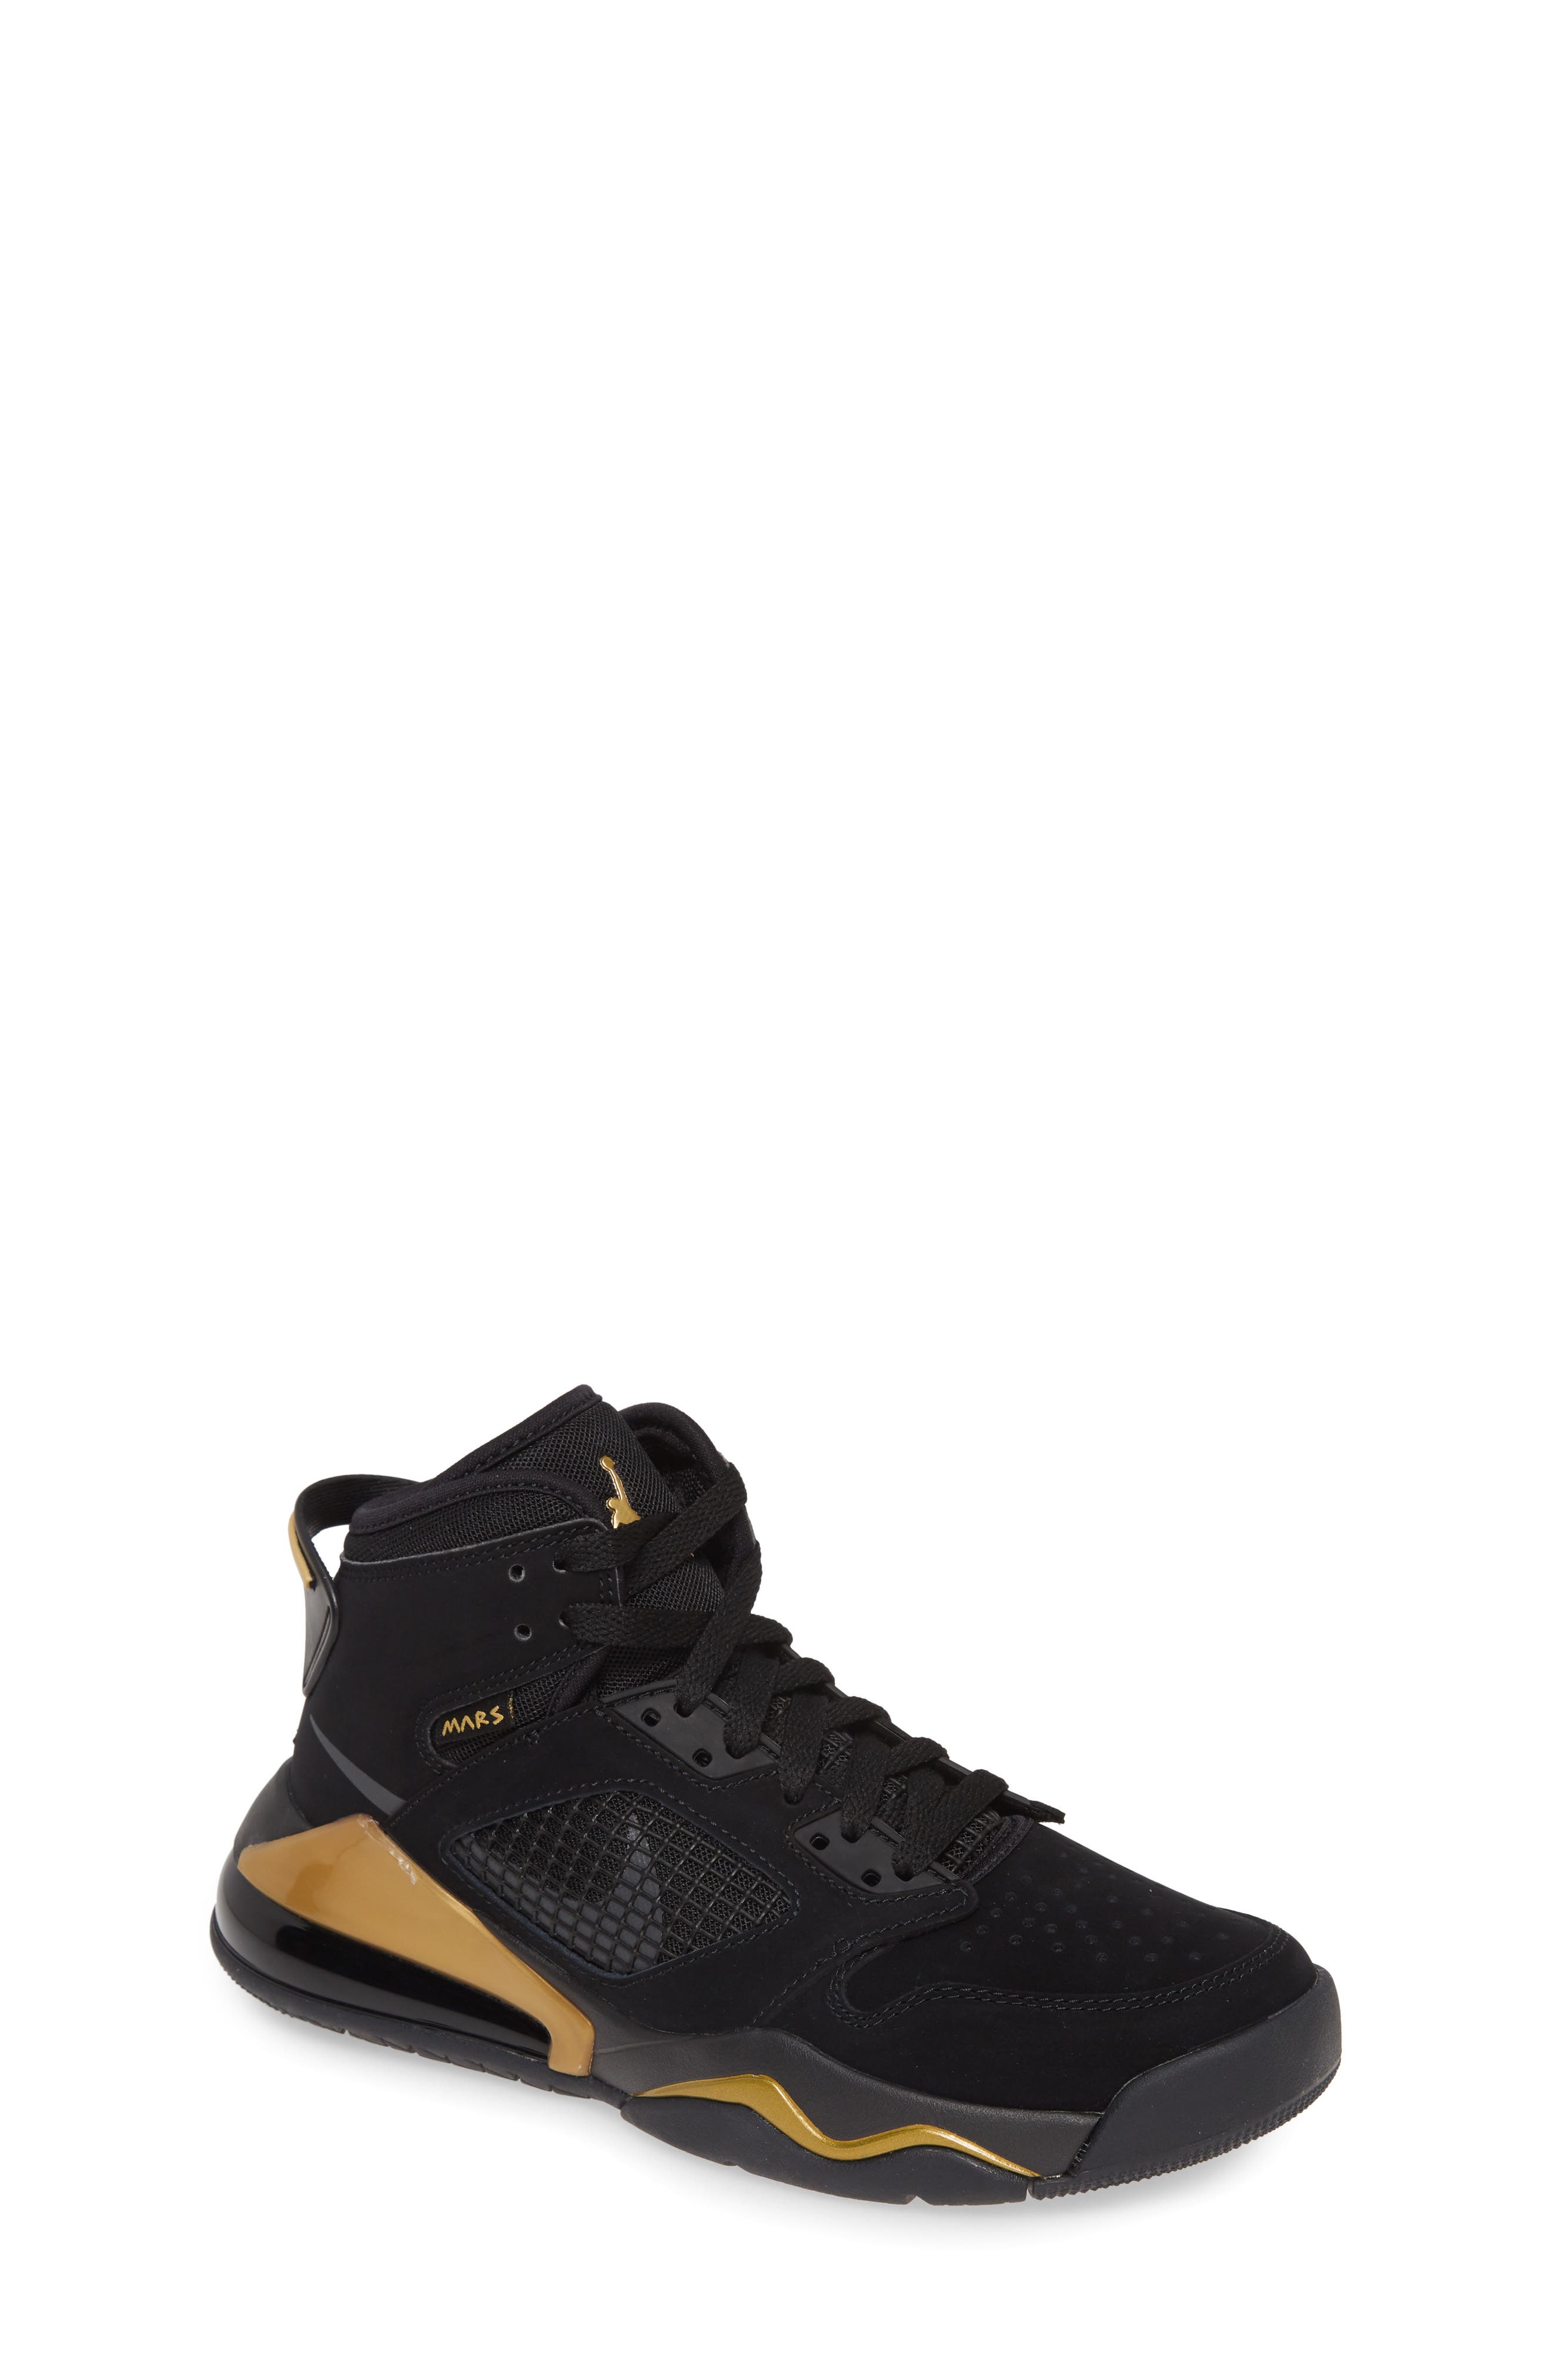 Jordan Mars 270 Basketball Shoe (Big 